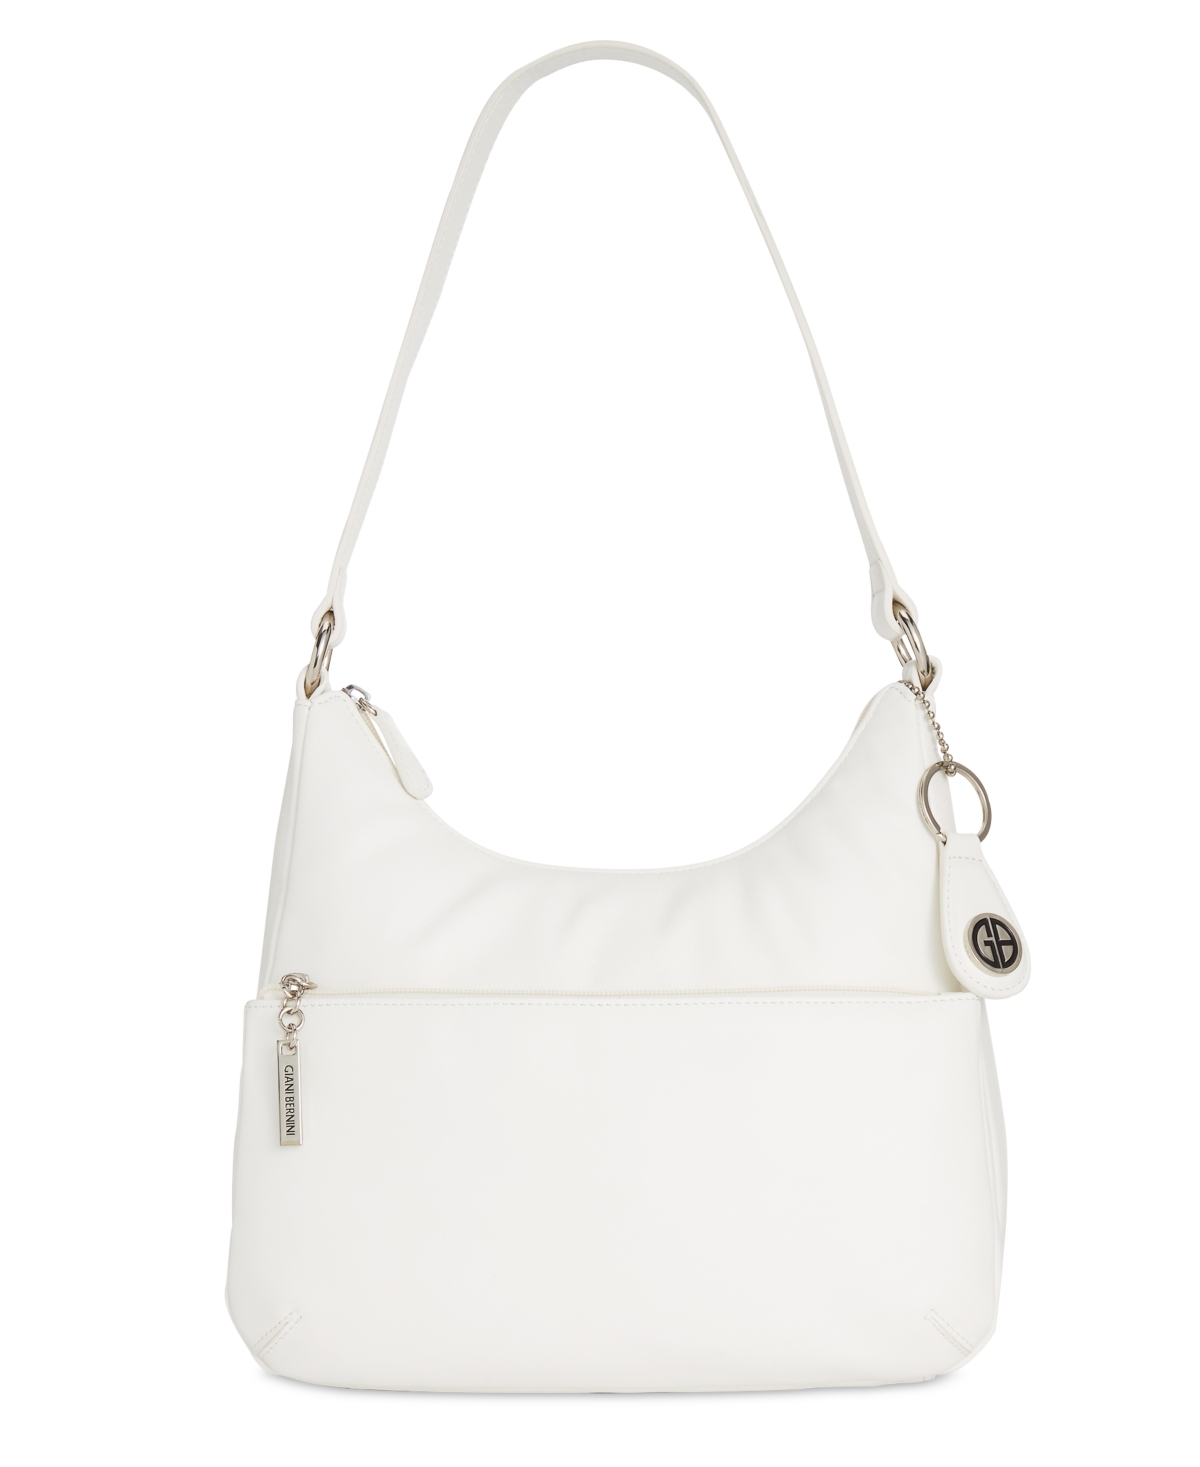 Giani Bernini Nappa Leather Hobo Bag, Created For Macy's In White,silver